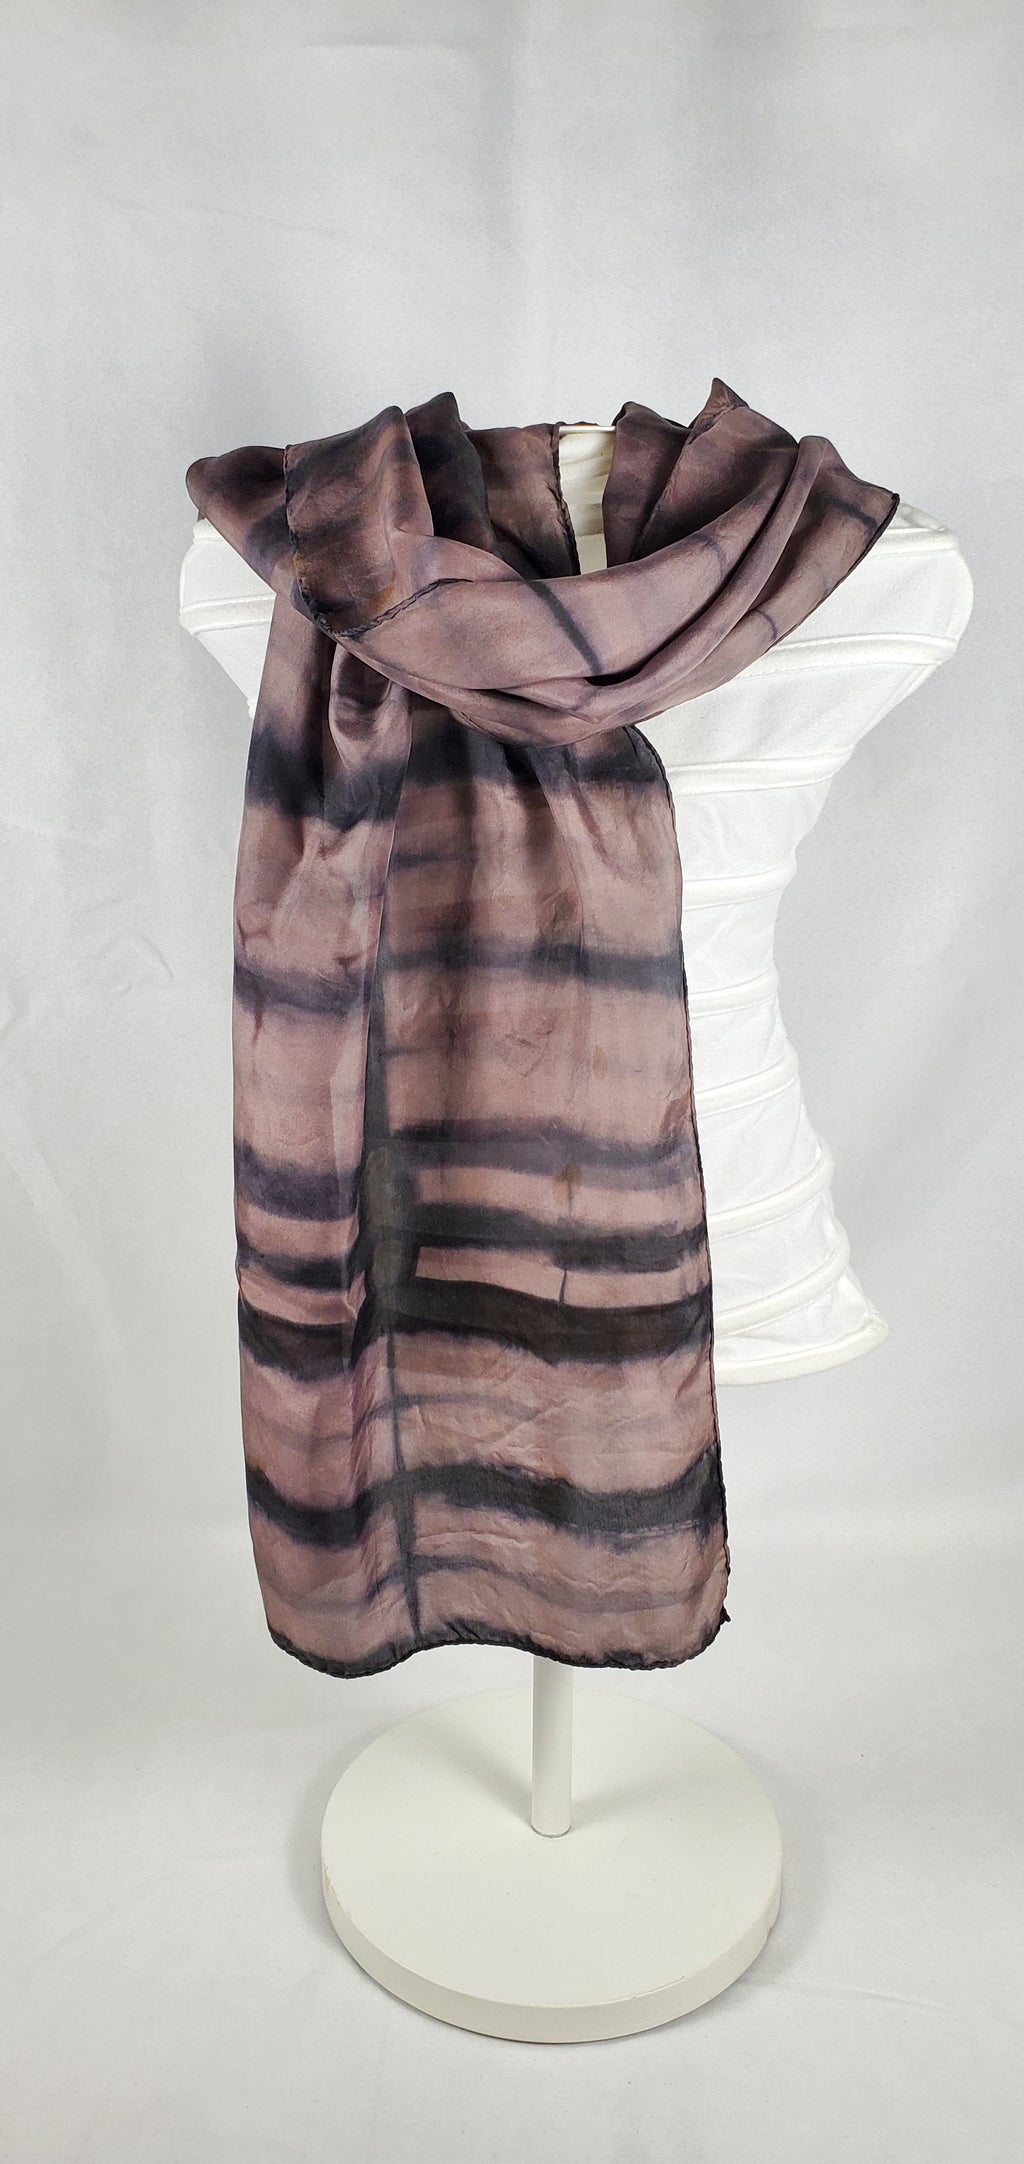 Silk hand dyed logwood woodblock shibori scarf